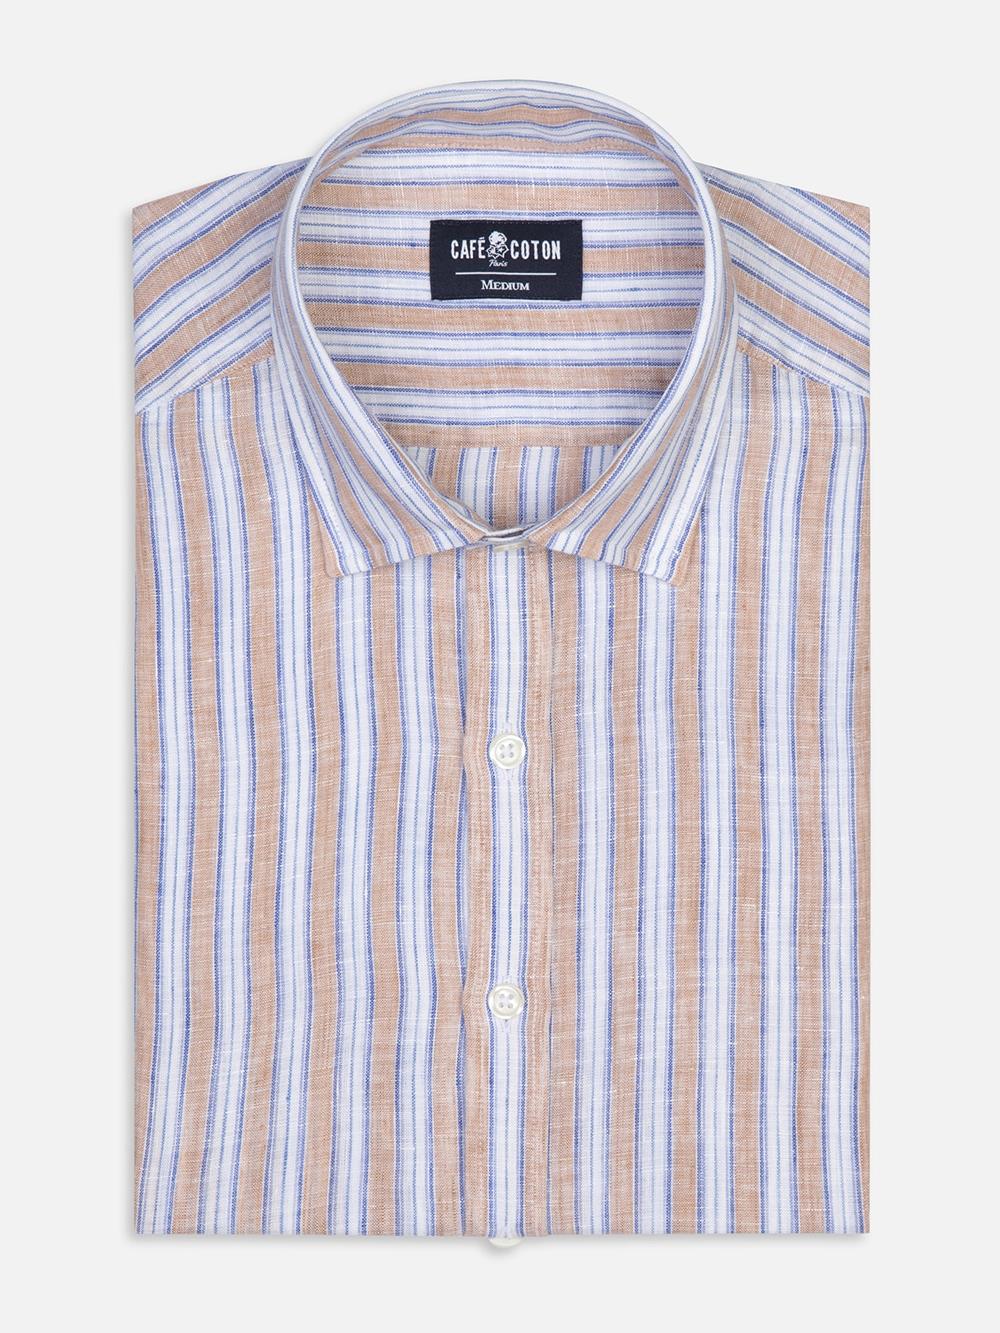 Colin shirt in sandy linen stripes